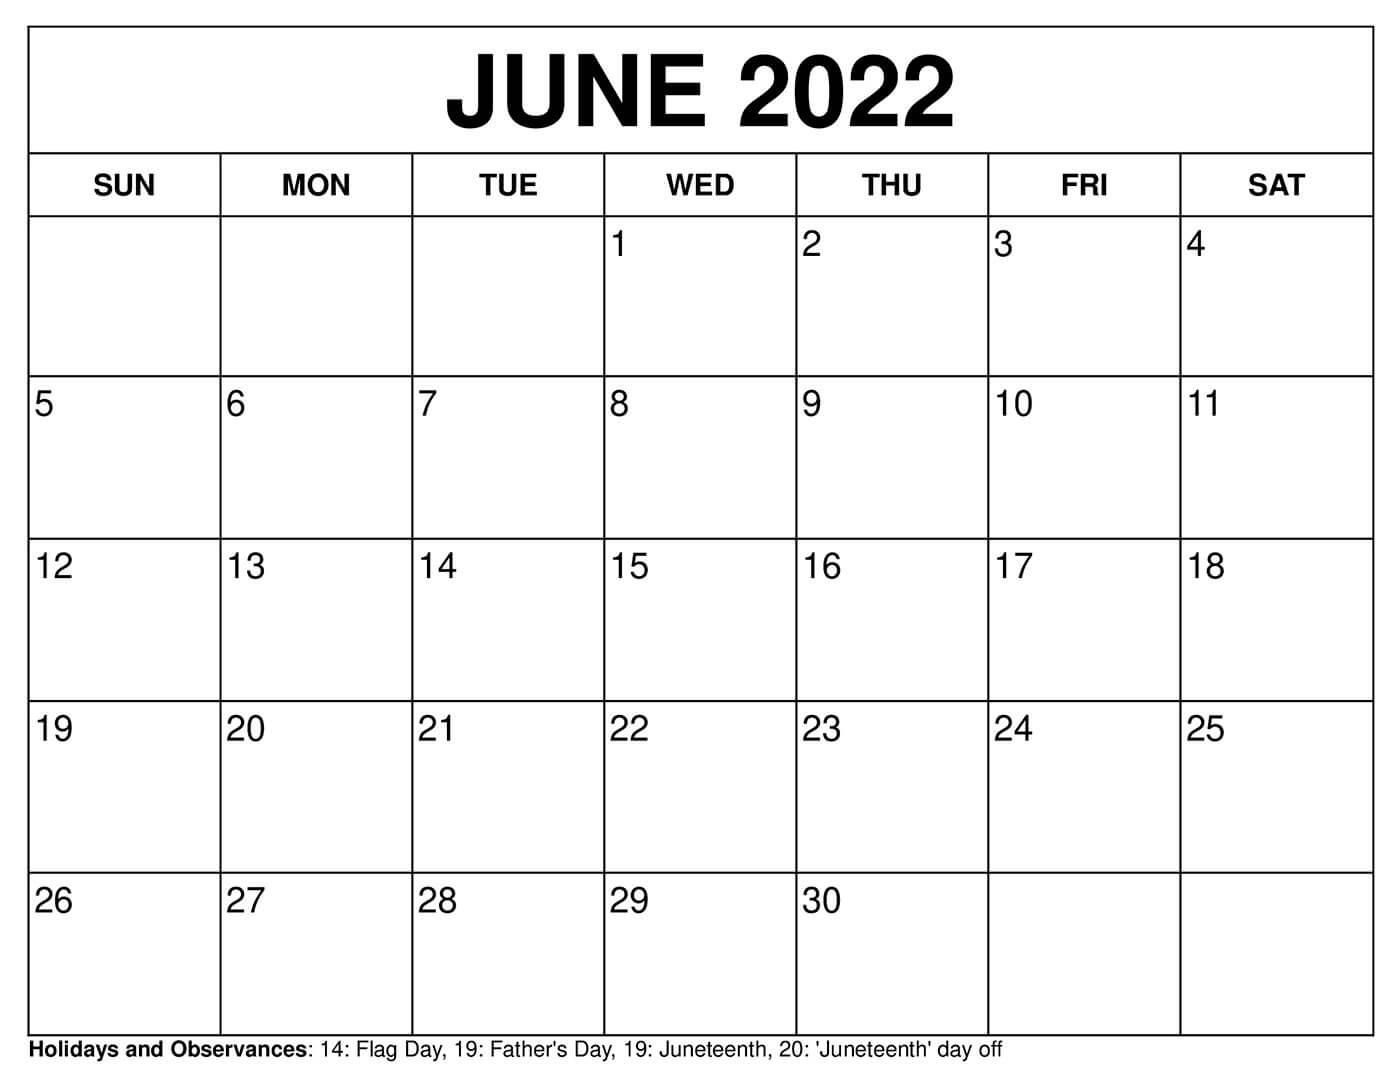 Blank June 2022 Calendar